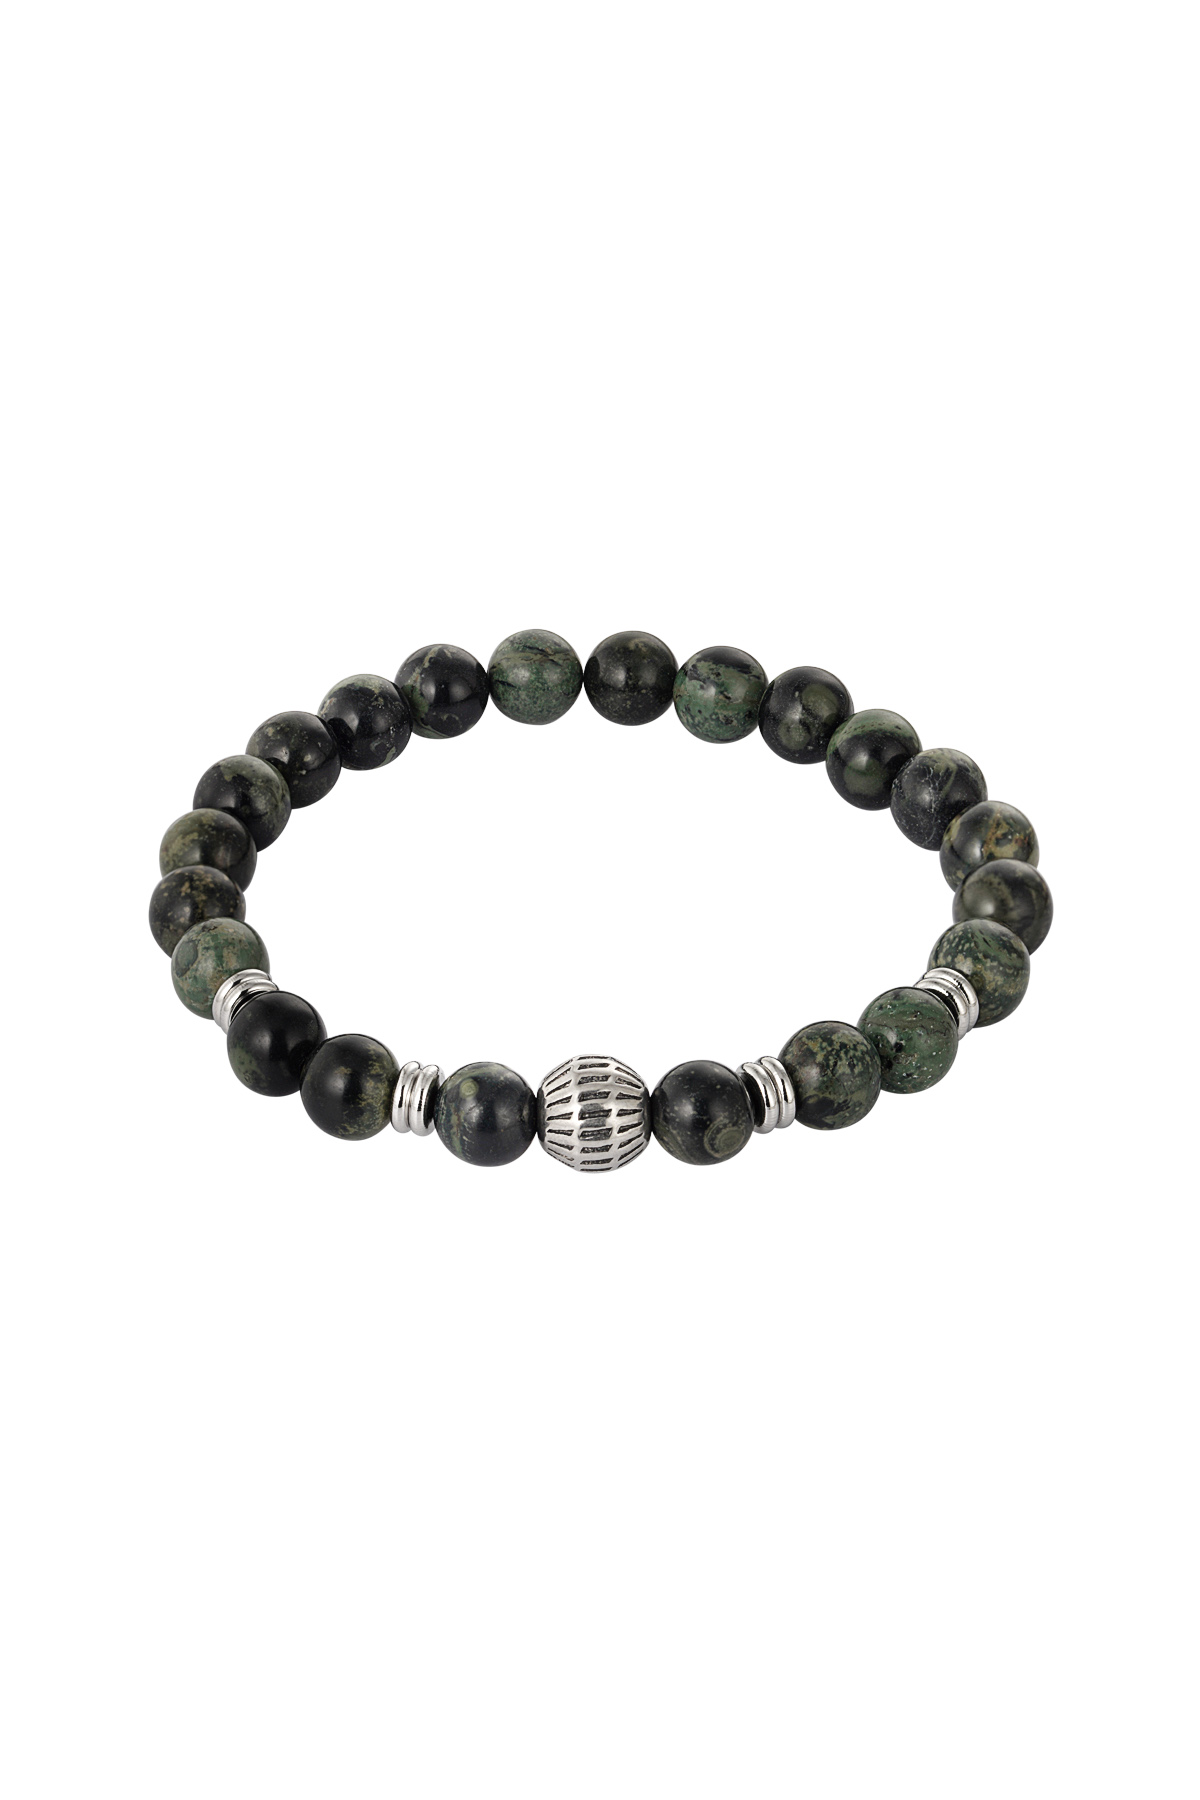 Simple men's bead bracelet charm - dark green